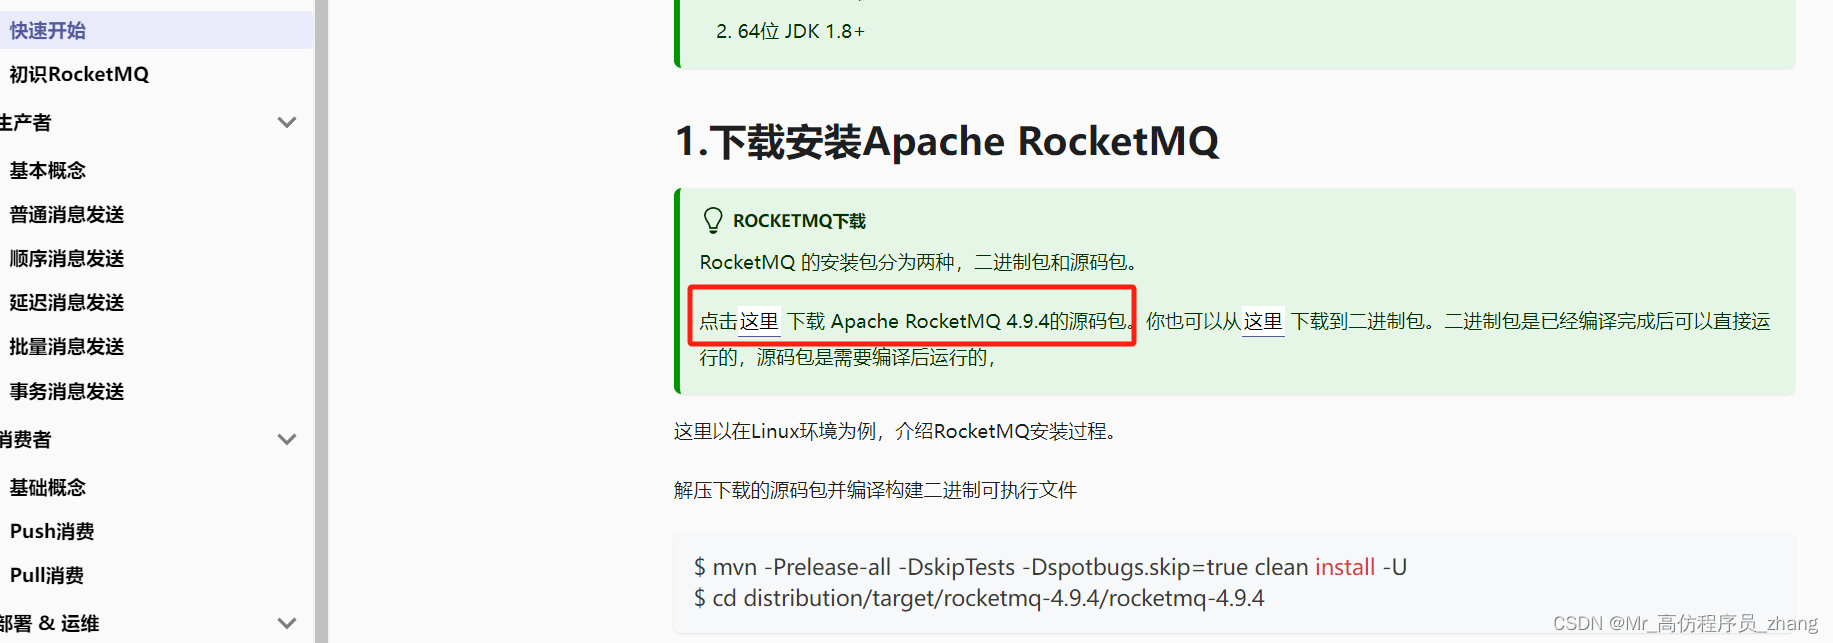 RocketMQ(版本4.9.4)+RocketMQ_Dashbord环境搭建（生产者、消费者的前置环境搭建）